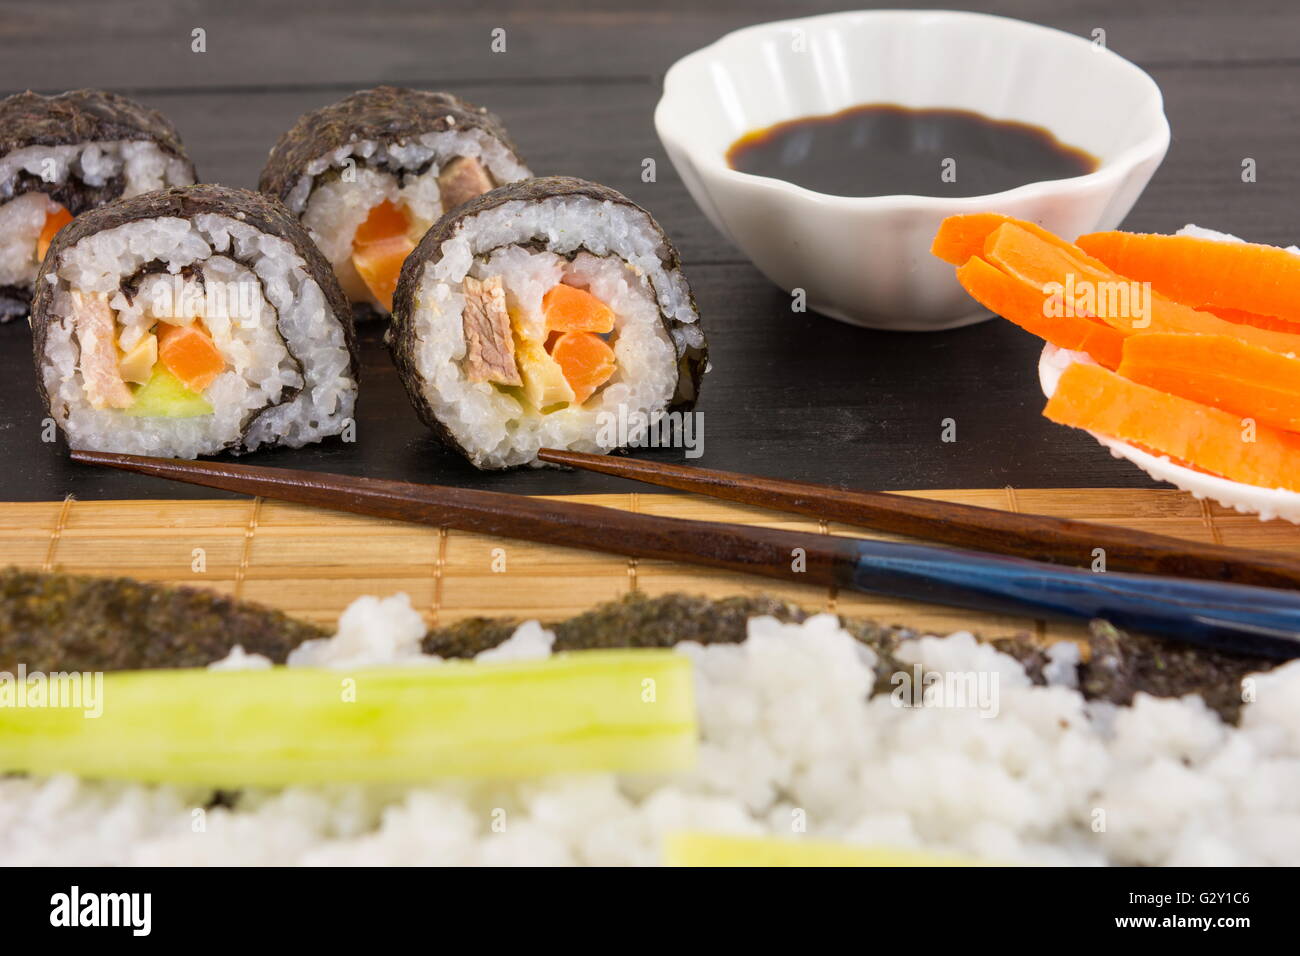 Preparing sushi. Sushi ingredients and made sushi rolls Stock Photo